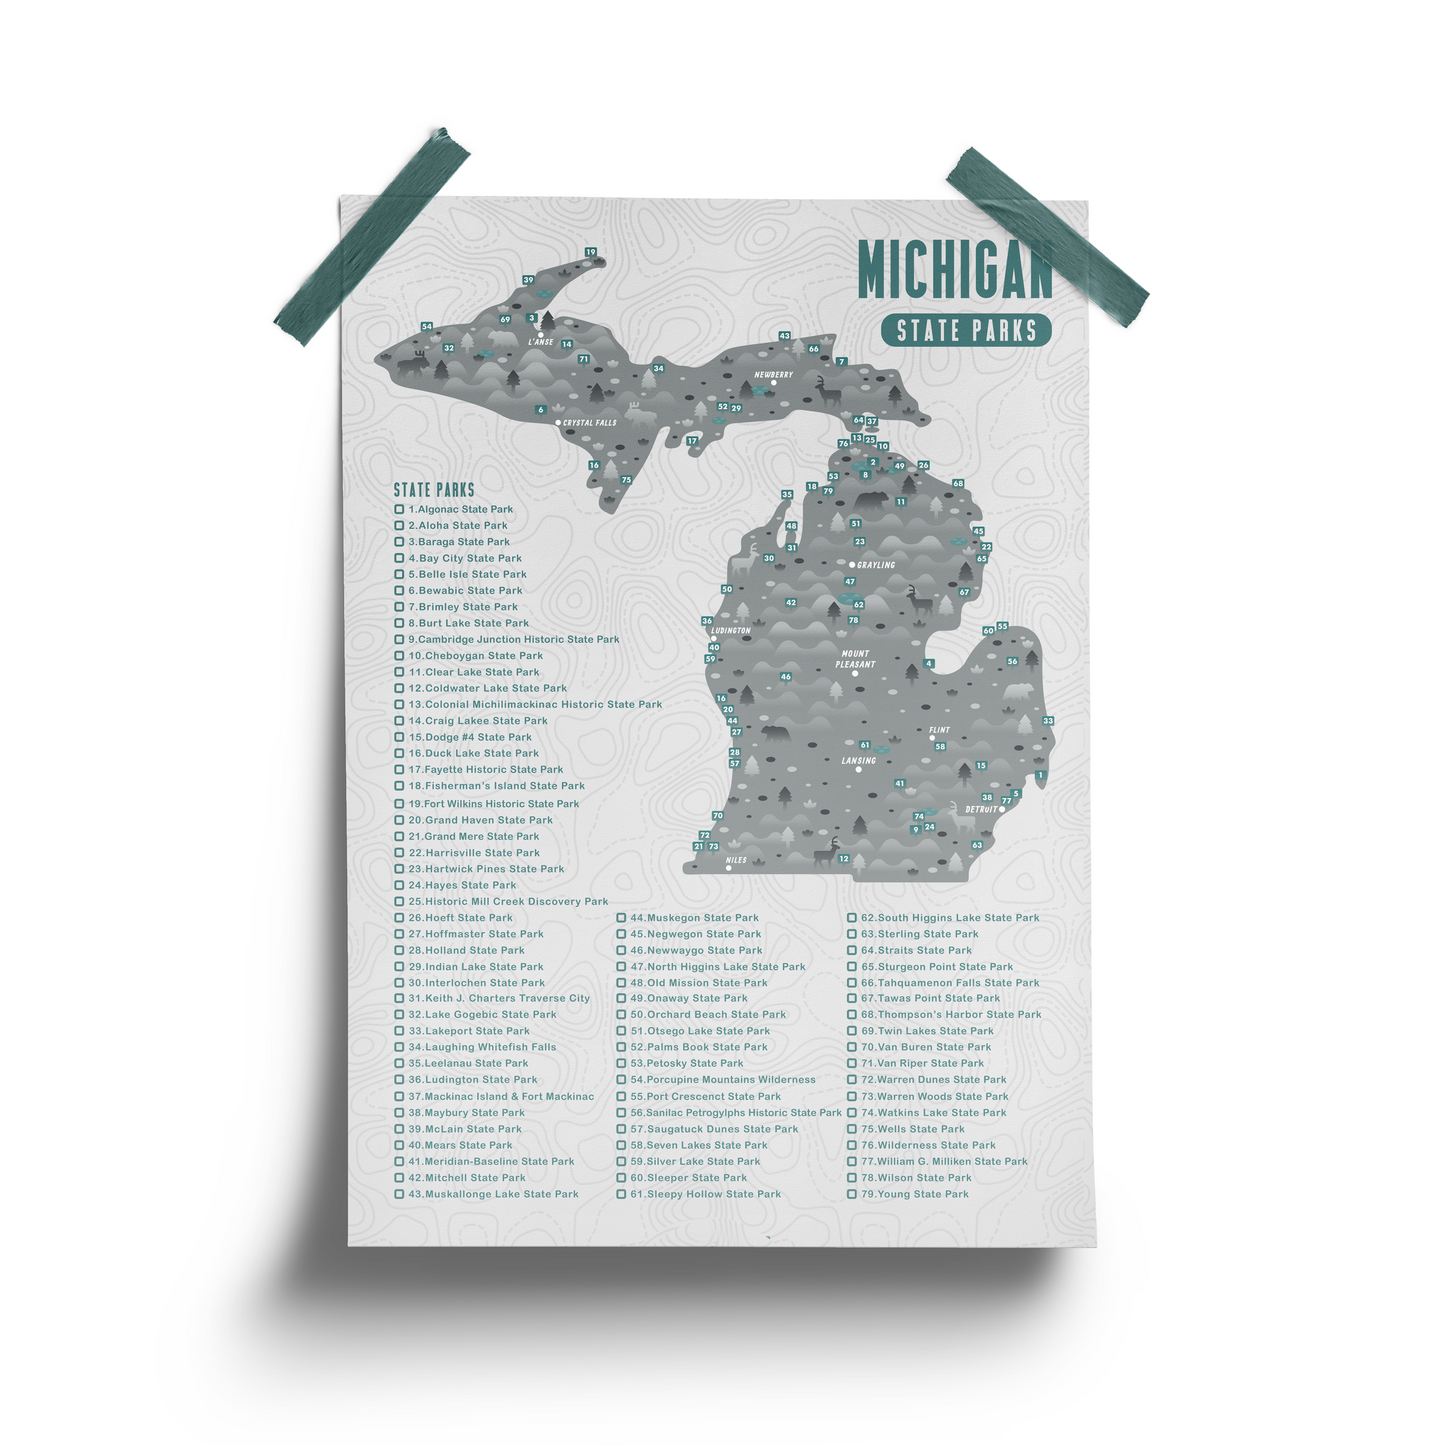 Michigan State Park Map - Checklist